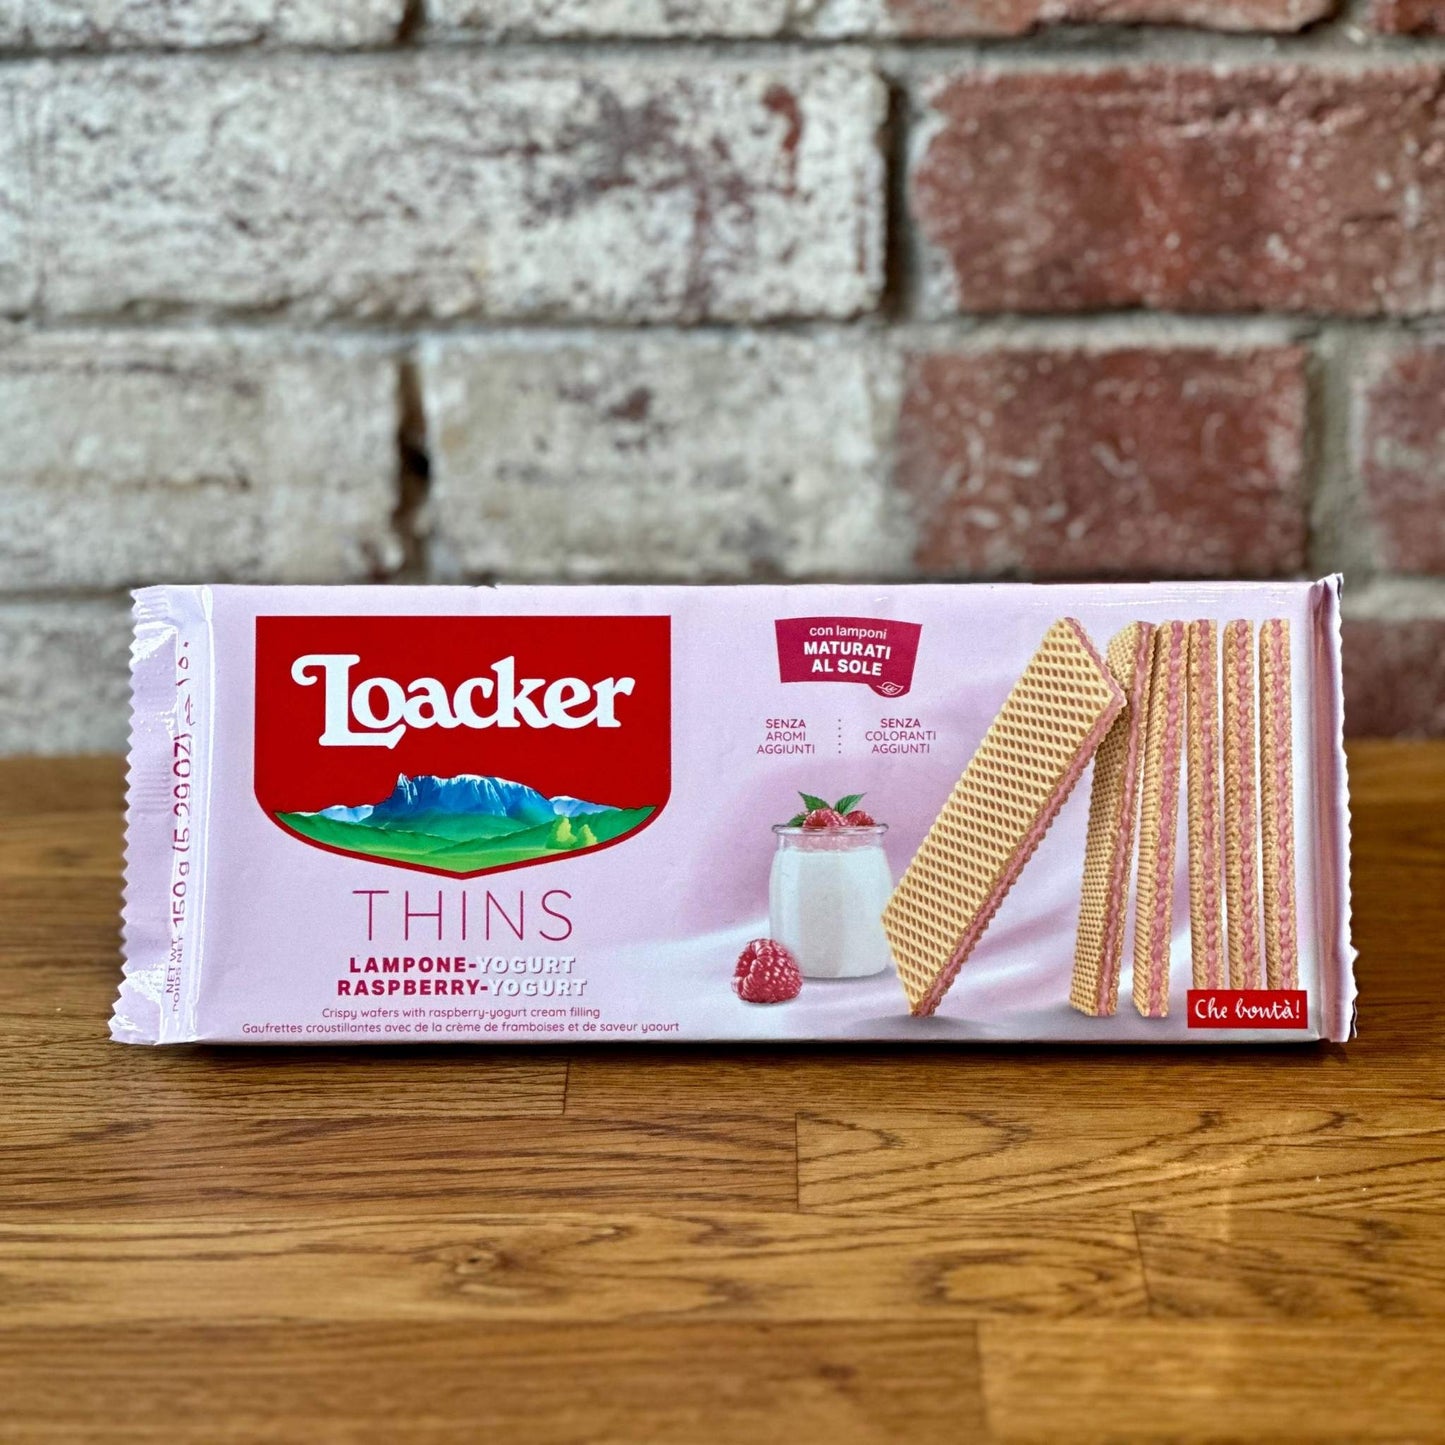 Raspberry Yogurt Thins Cookies - Loacker